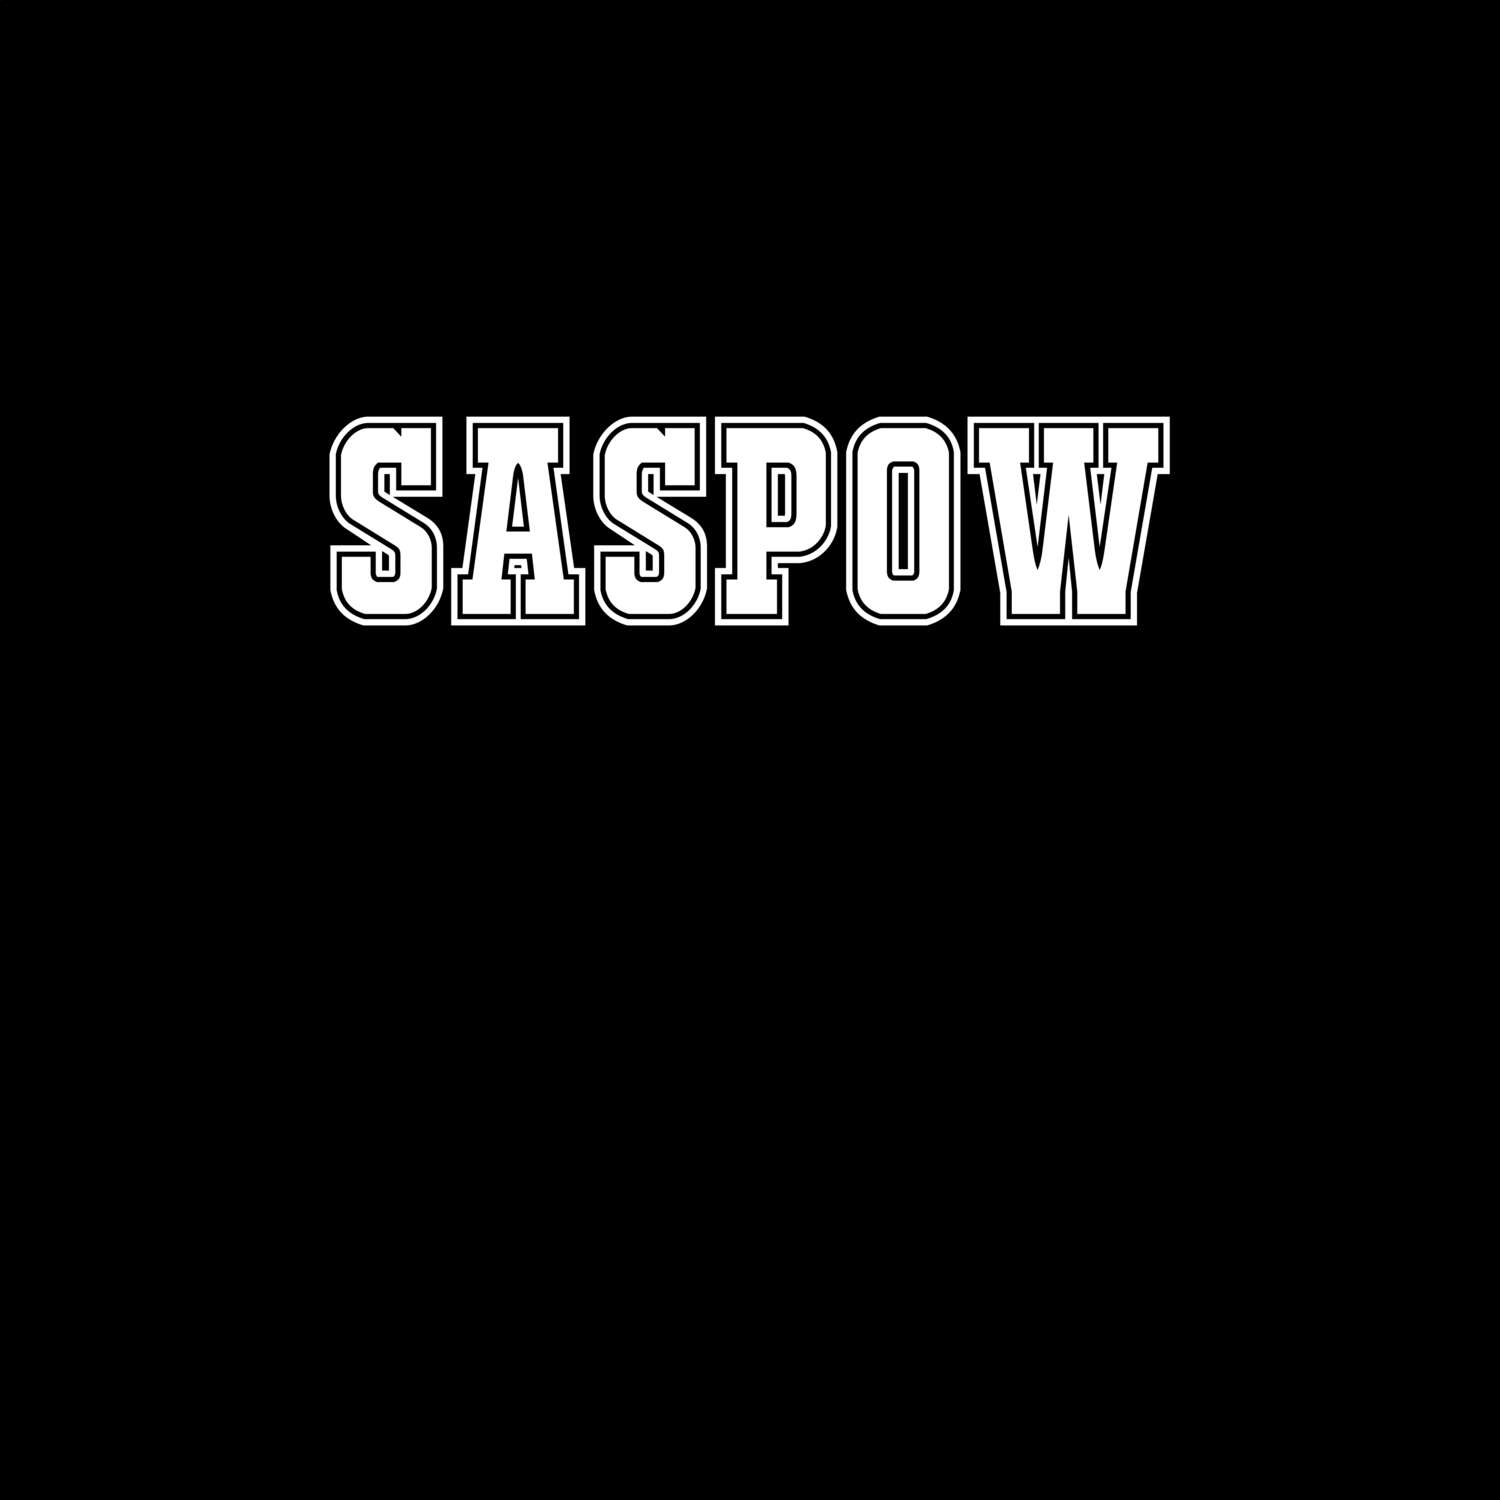 Saspow T-Shirt »Classic«